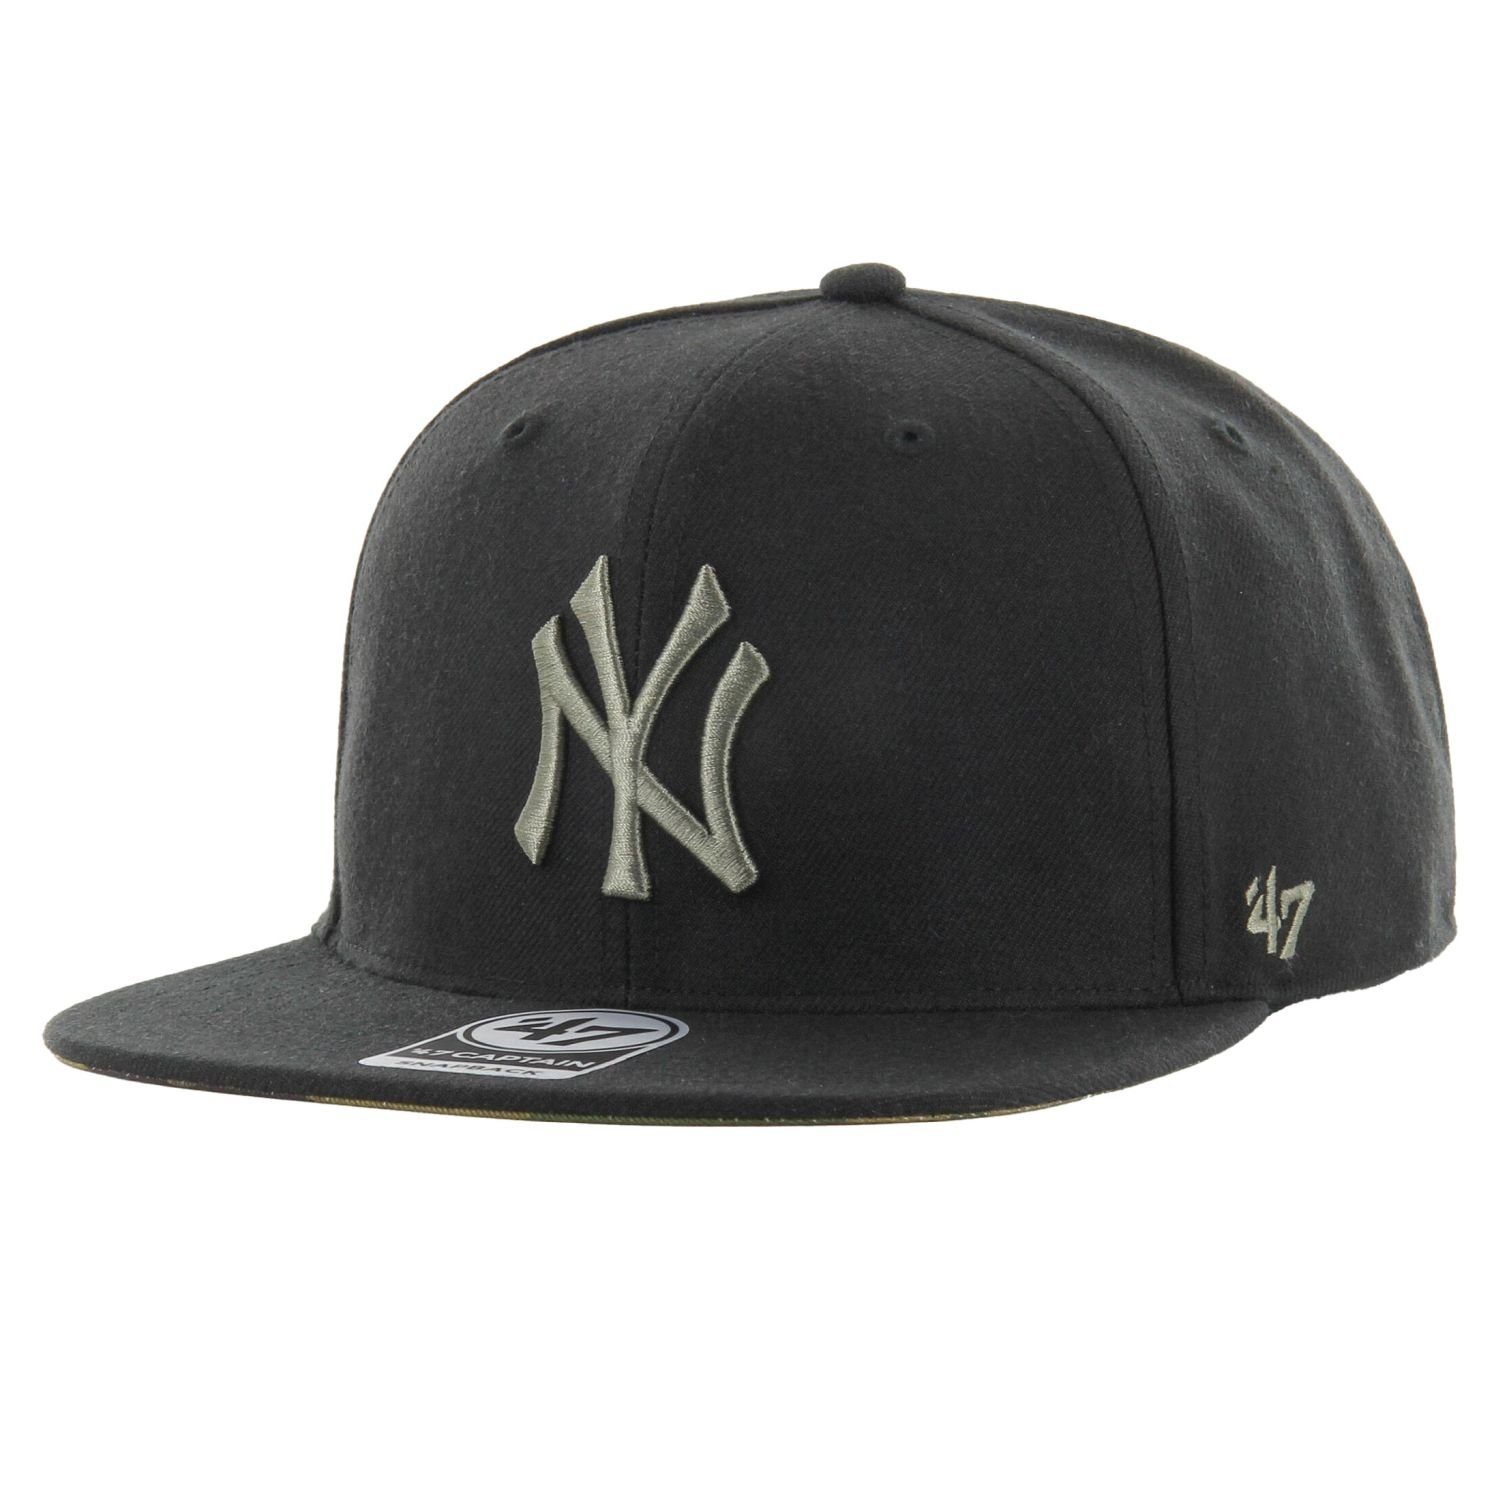 x27;47 Brand Snapback Cap Yankees New CAPTAIN York